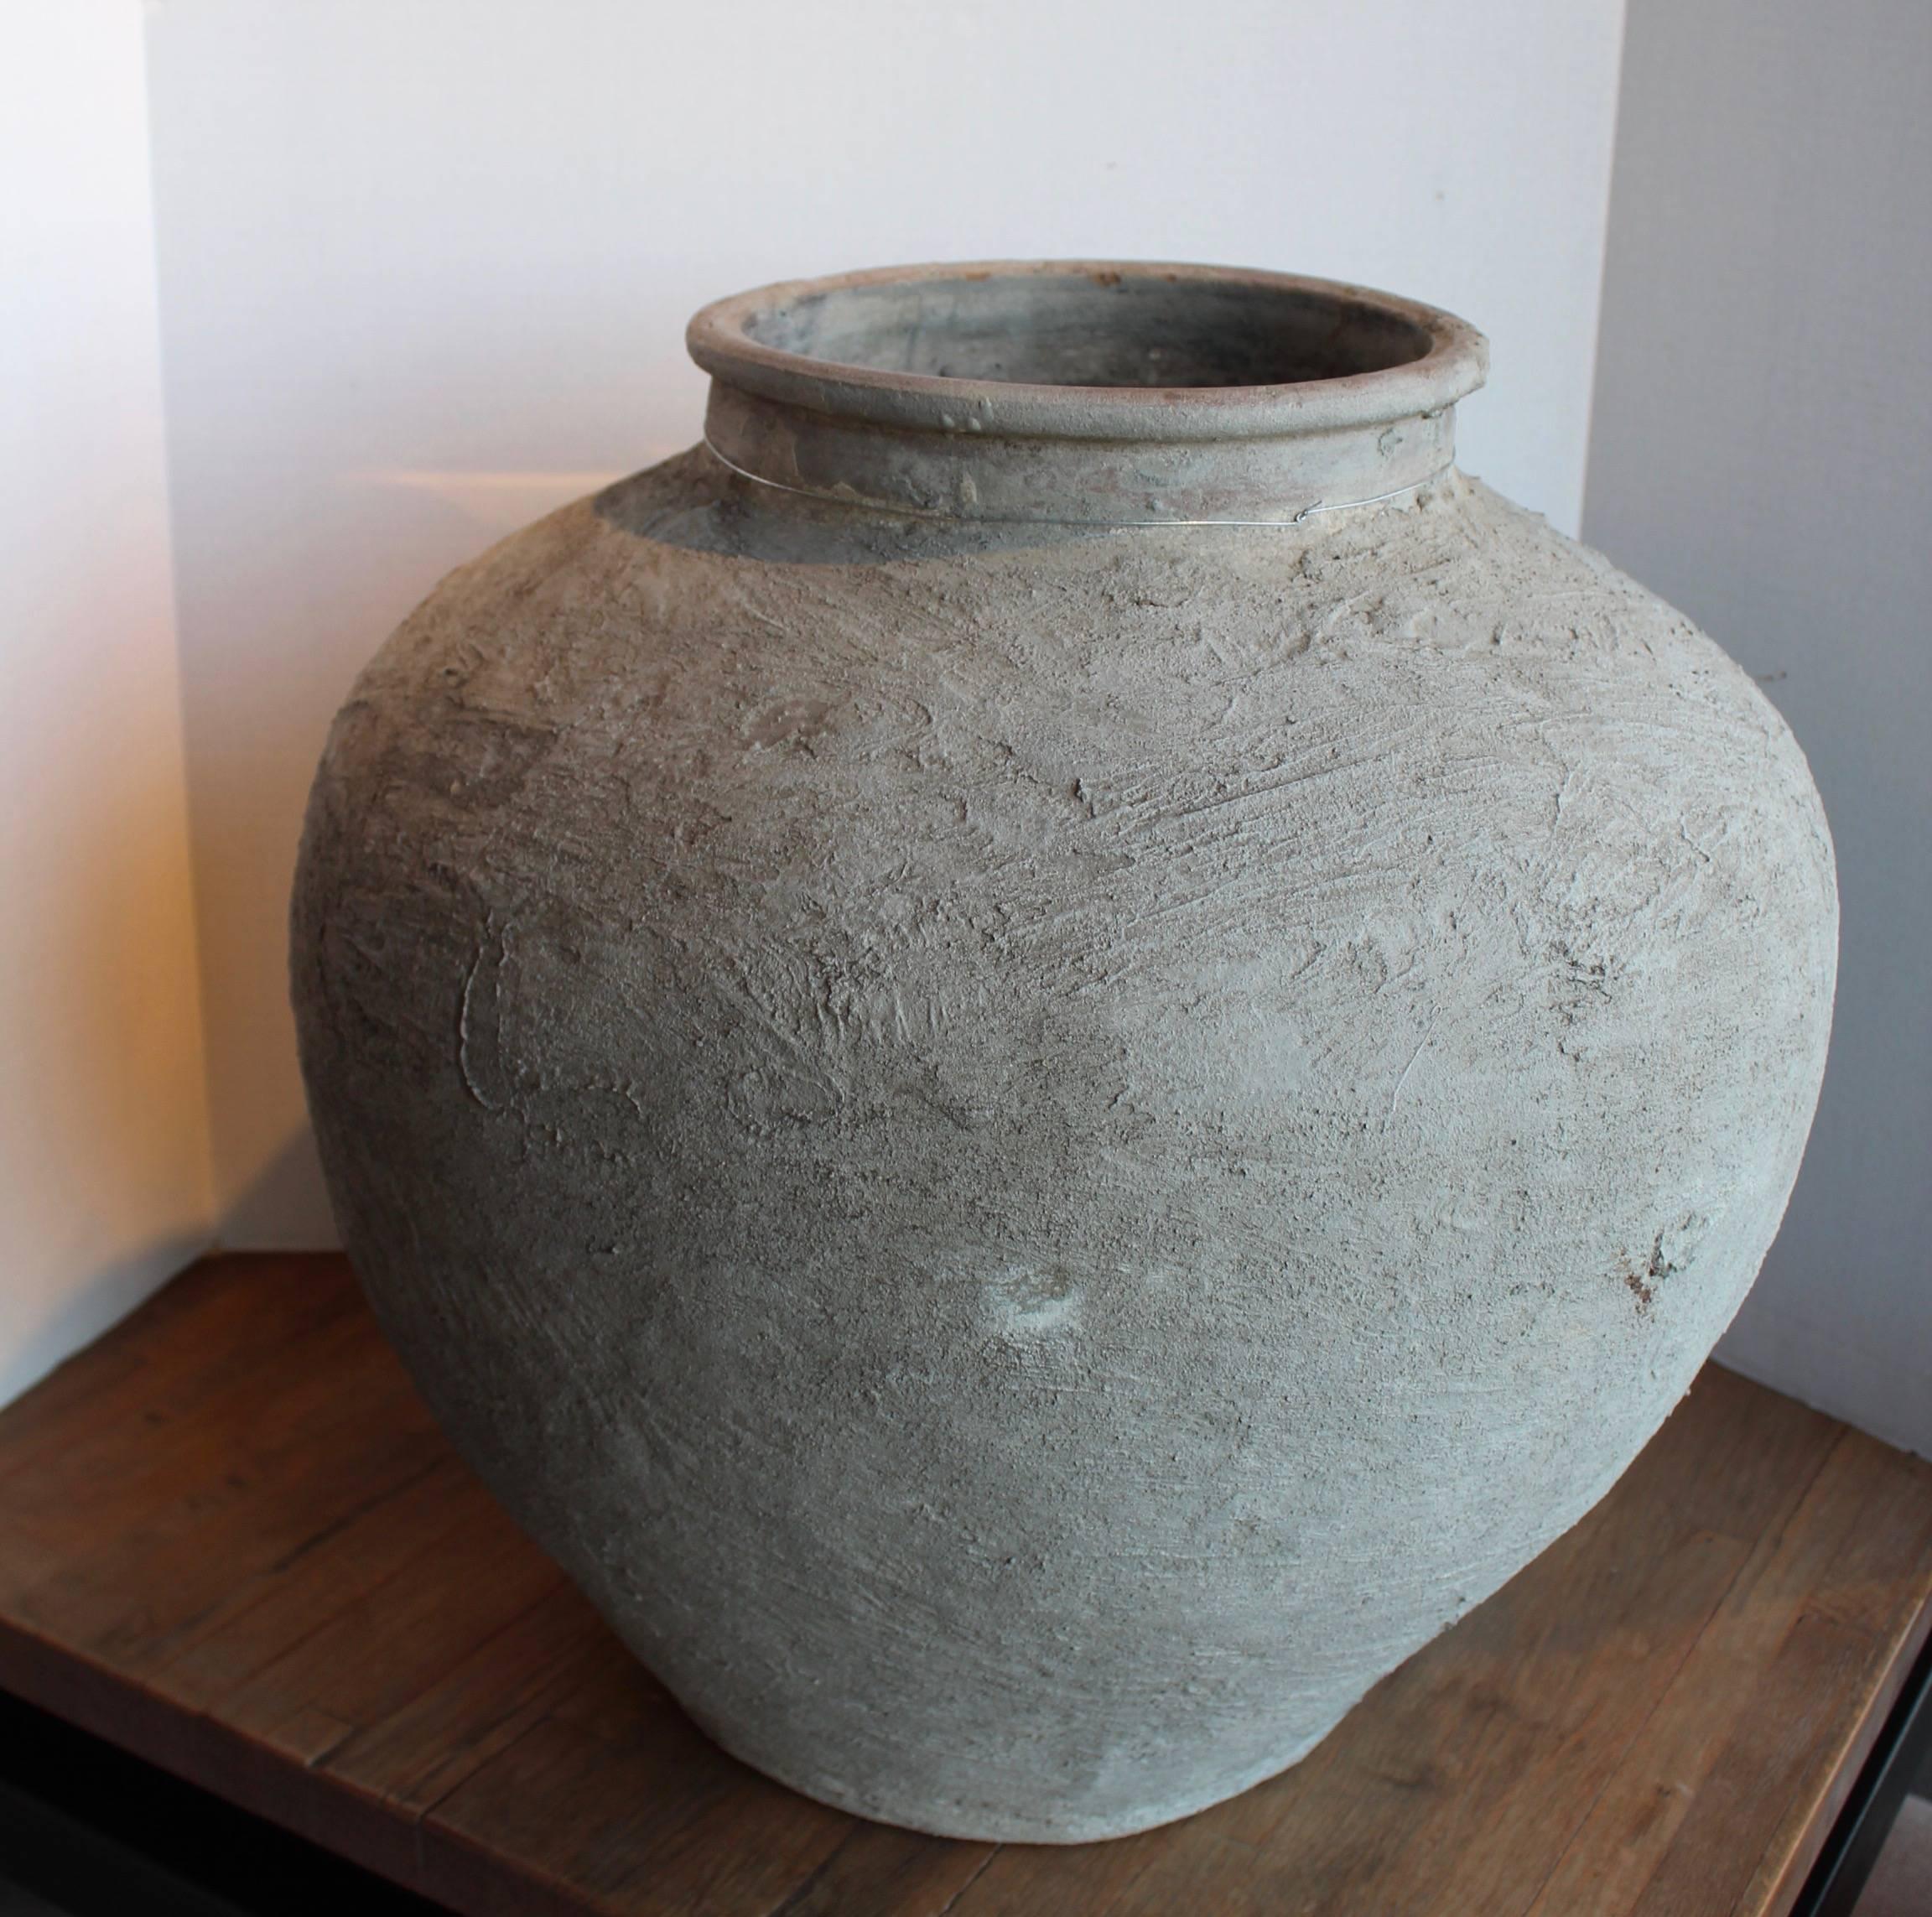 Primitive antique terra cotta jar. 
Antique, 1900s, France. 
Natural rough cement-like edges around jar.
Indoor or outdoor.